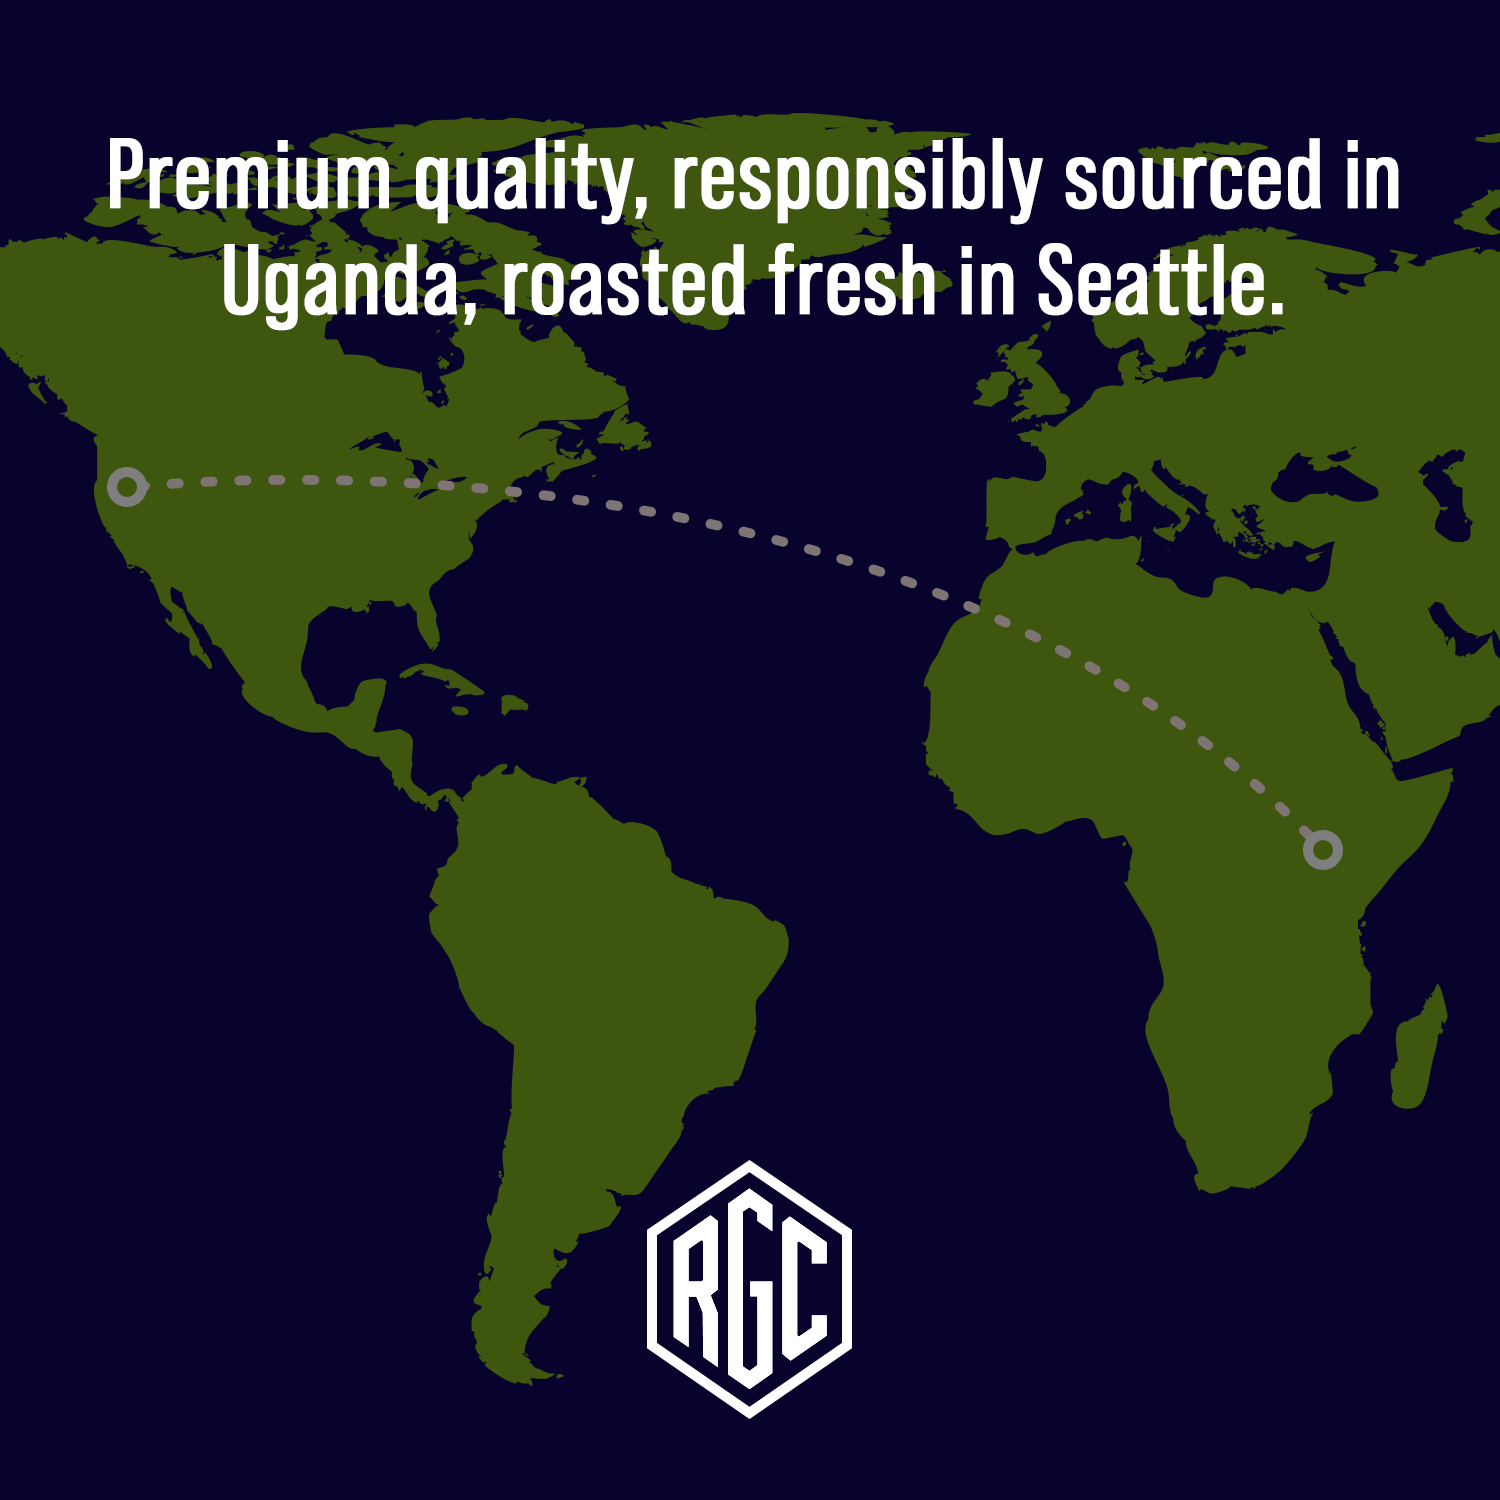 Fair Trade Single Origin: Uganda Light Roast Whole Bean Coffee 2 LB